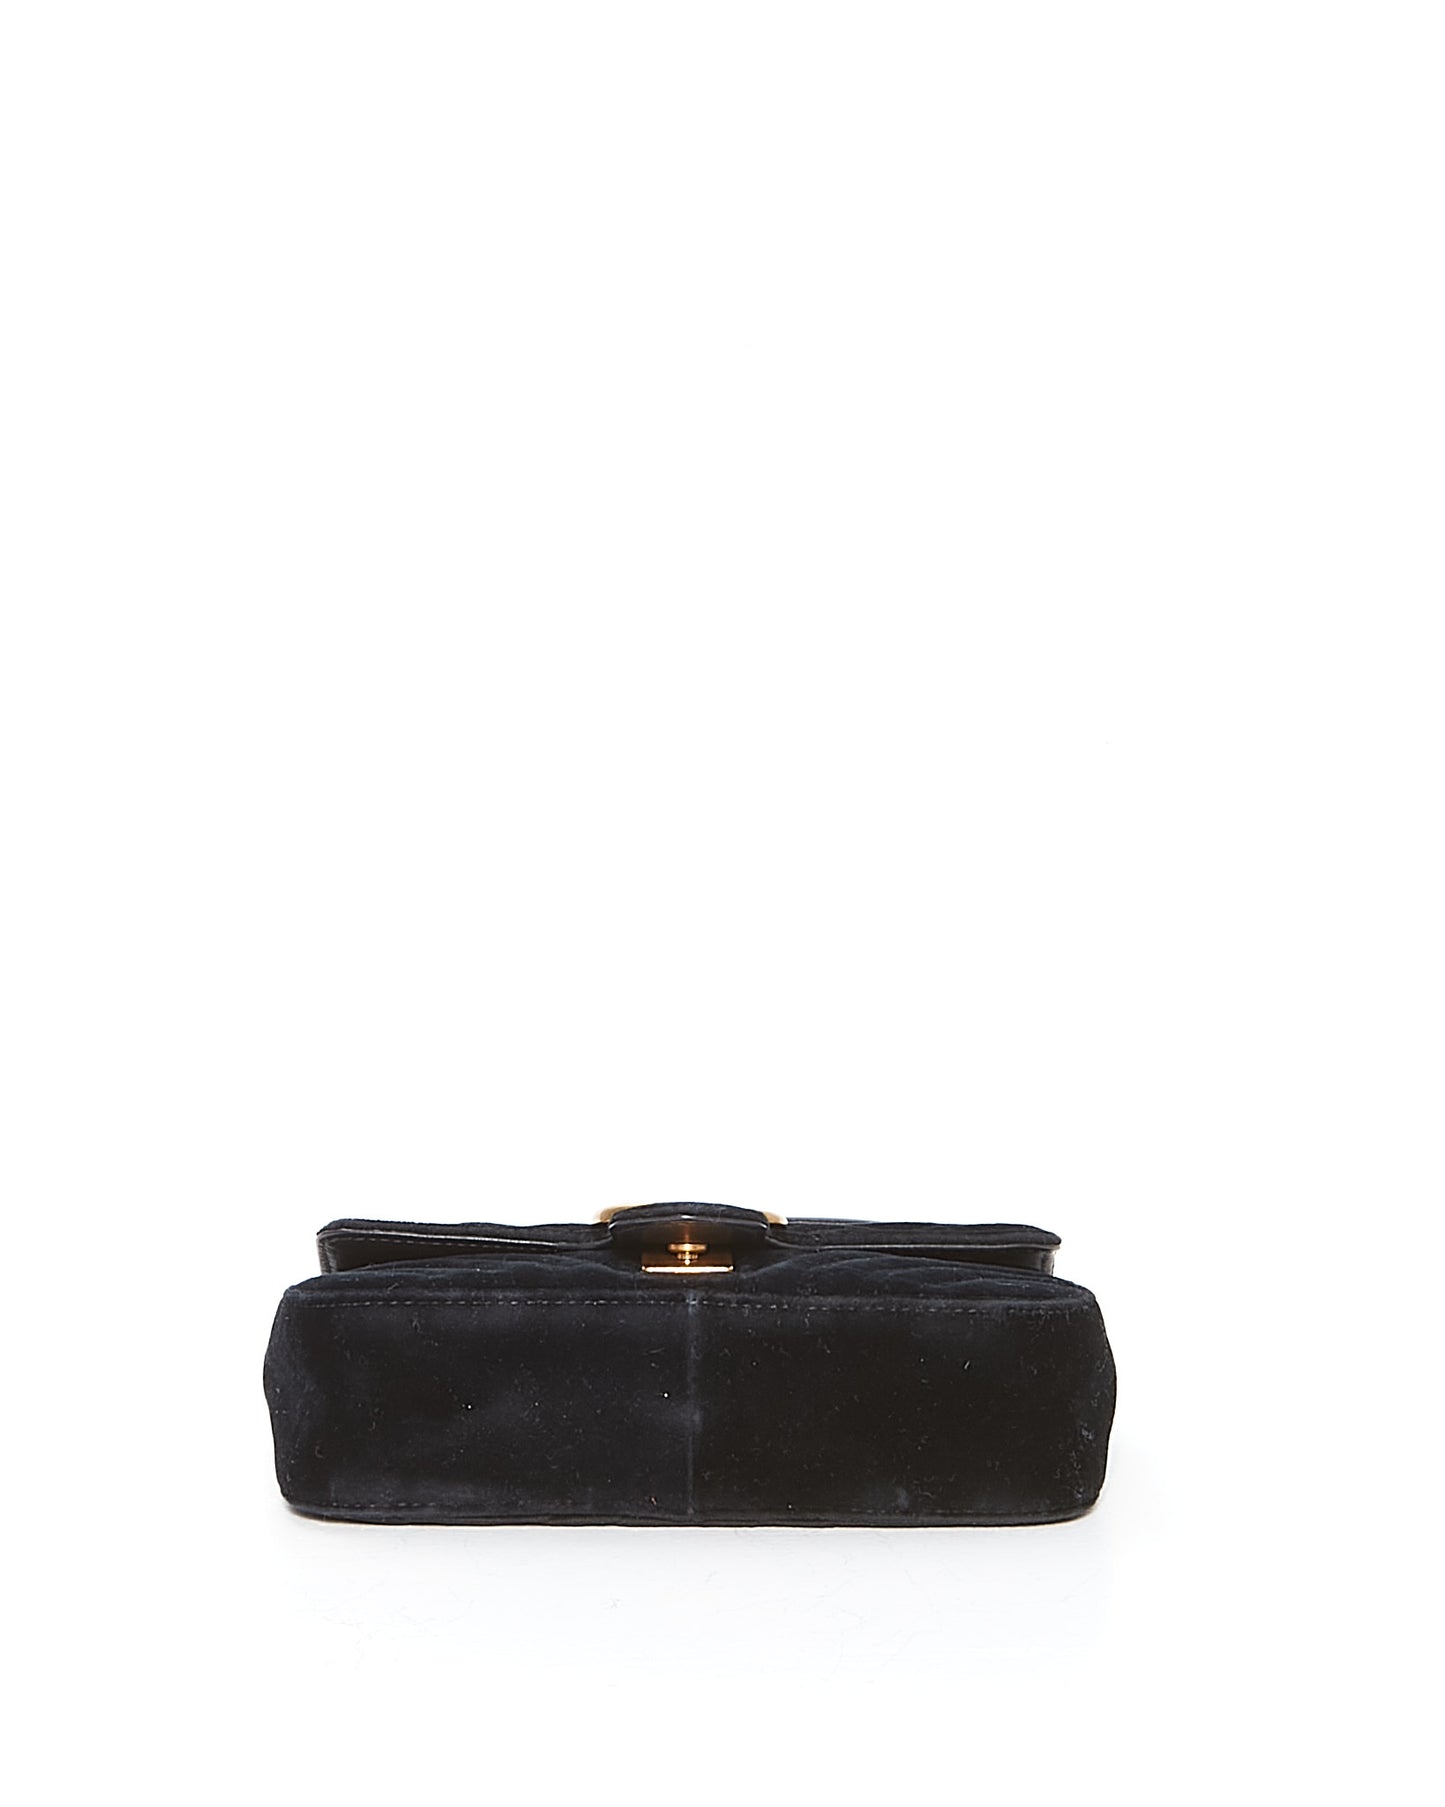 Gucci Black Velvet Marmont Mini Matelasse Chain Bag